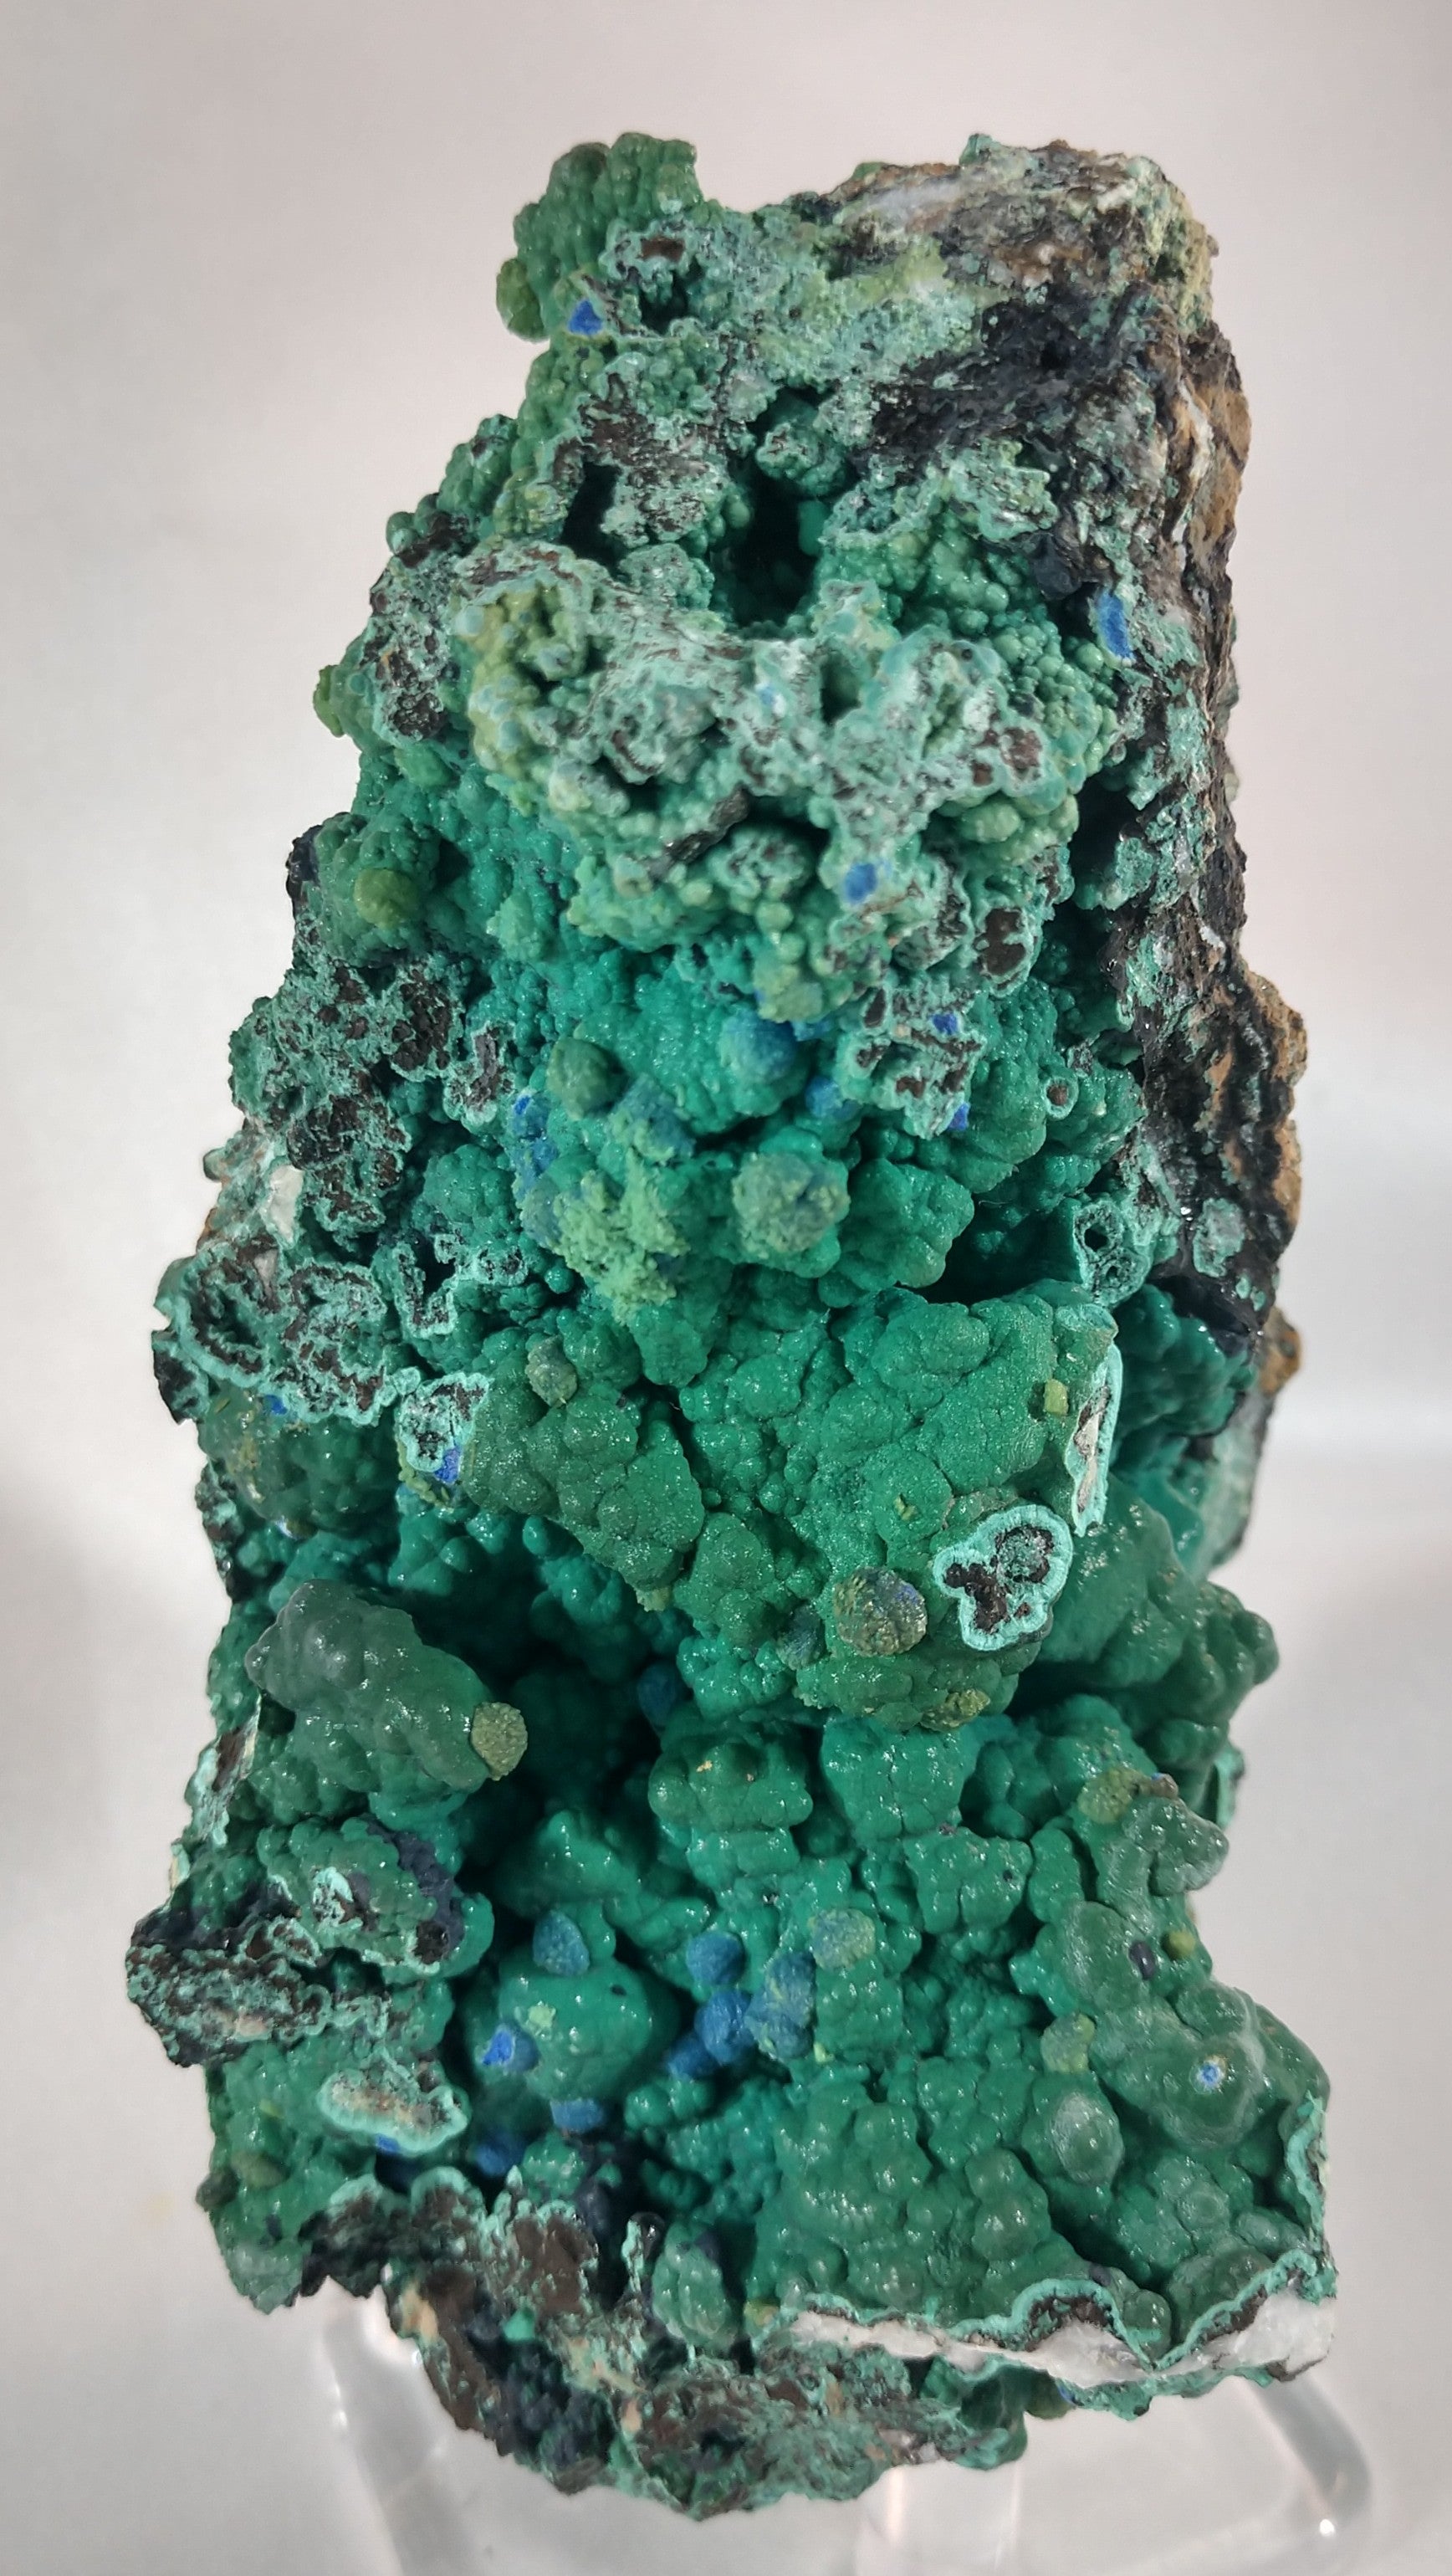 Malachite with Azurite, Phelps Open Pit Mine